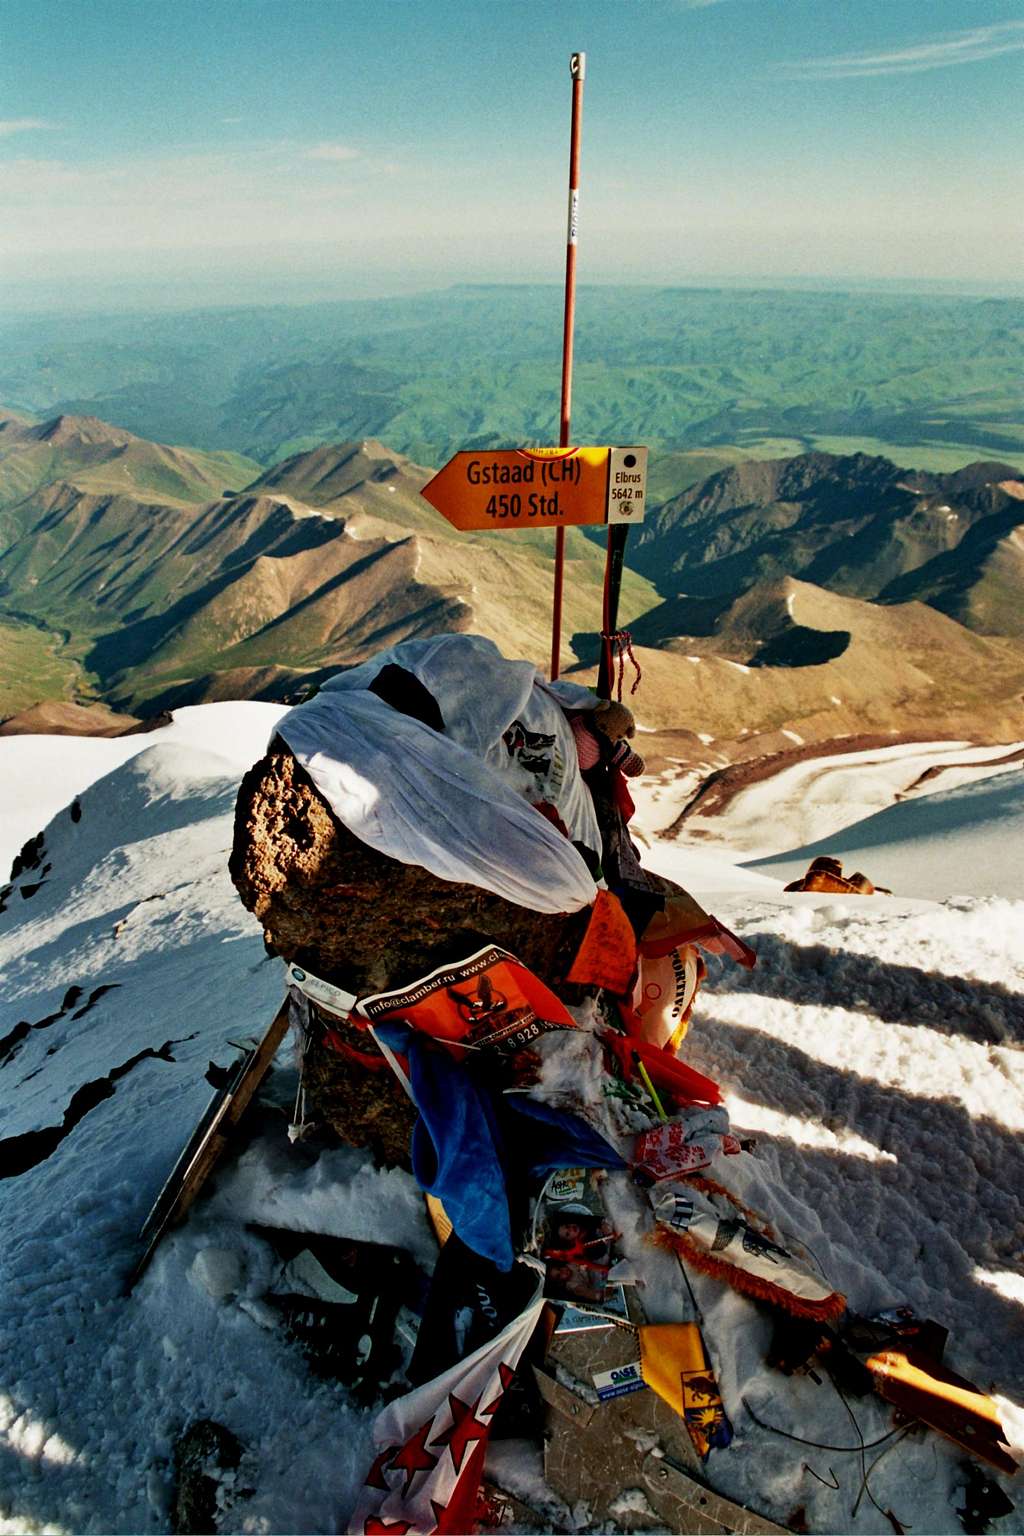 west summit of Elbrus,5642m.